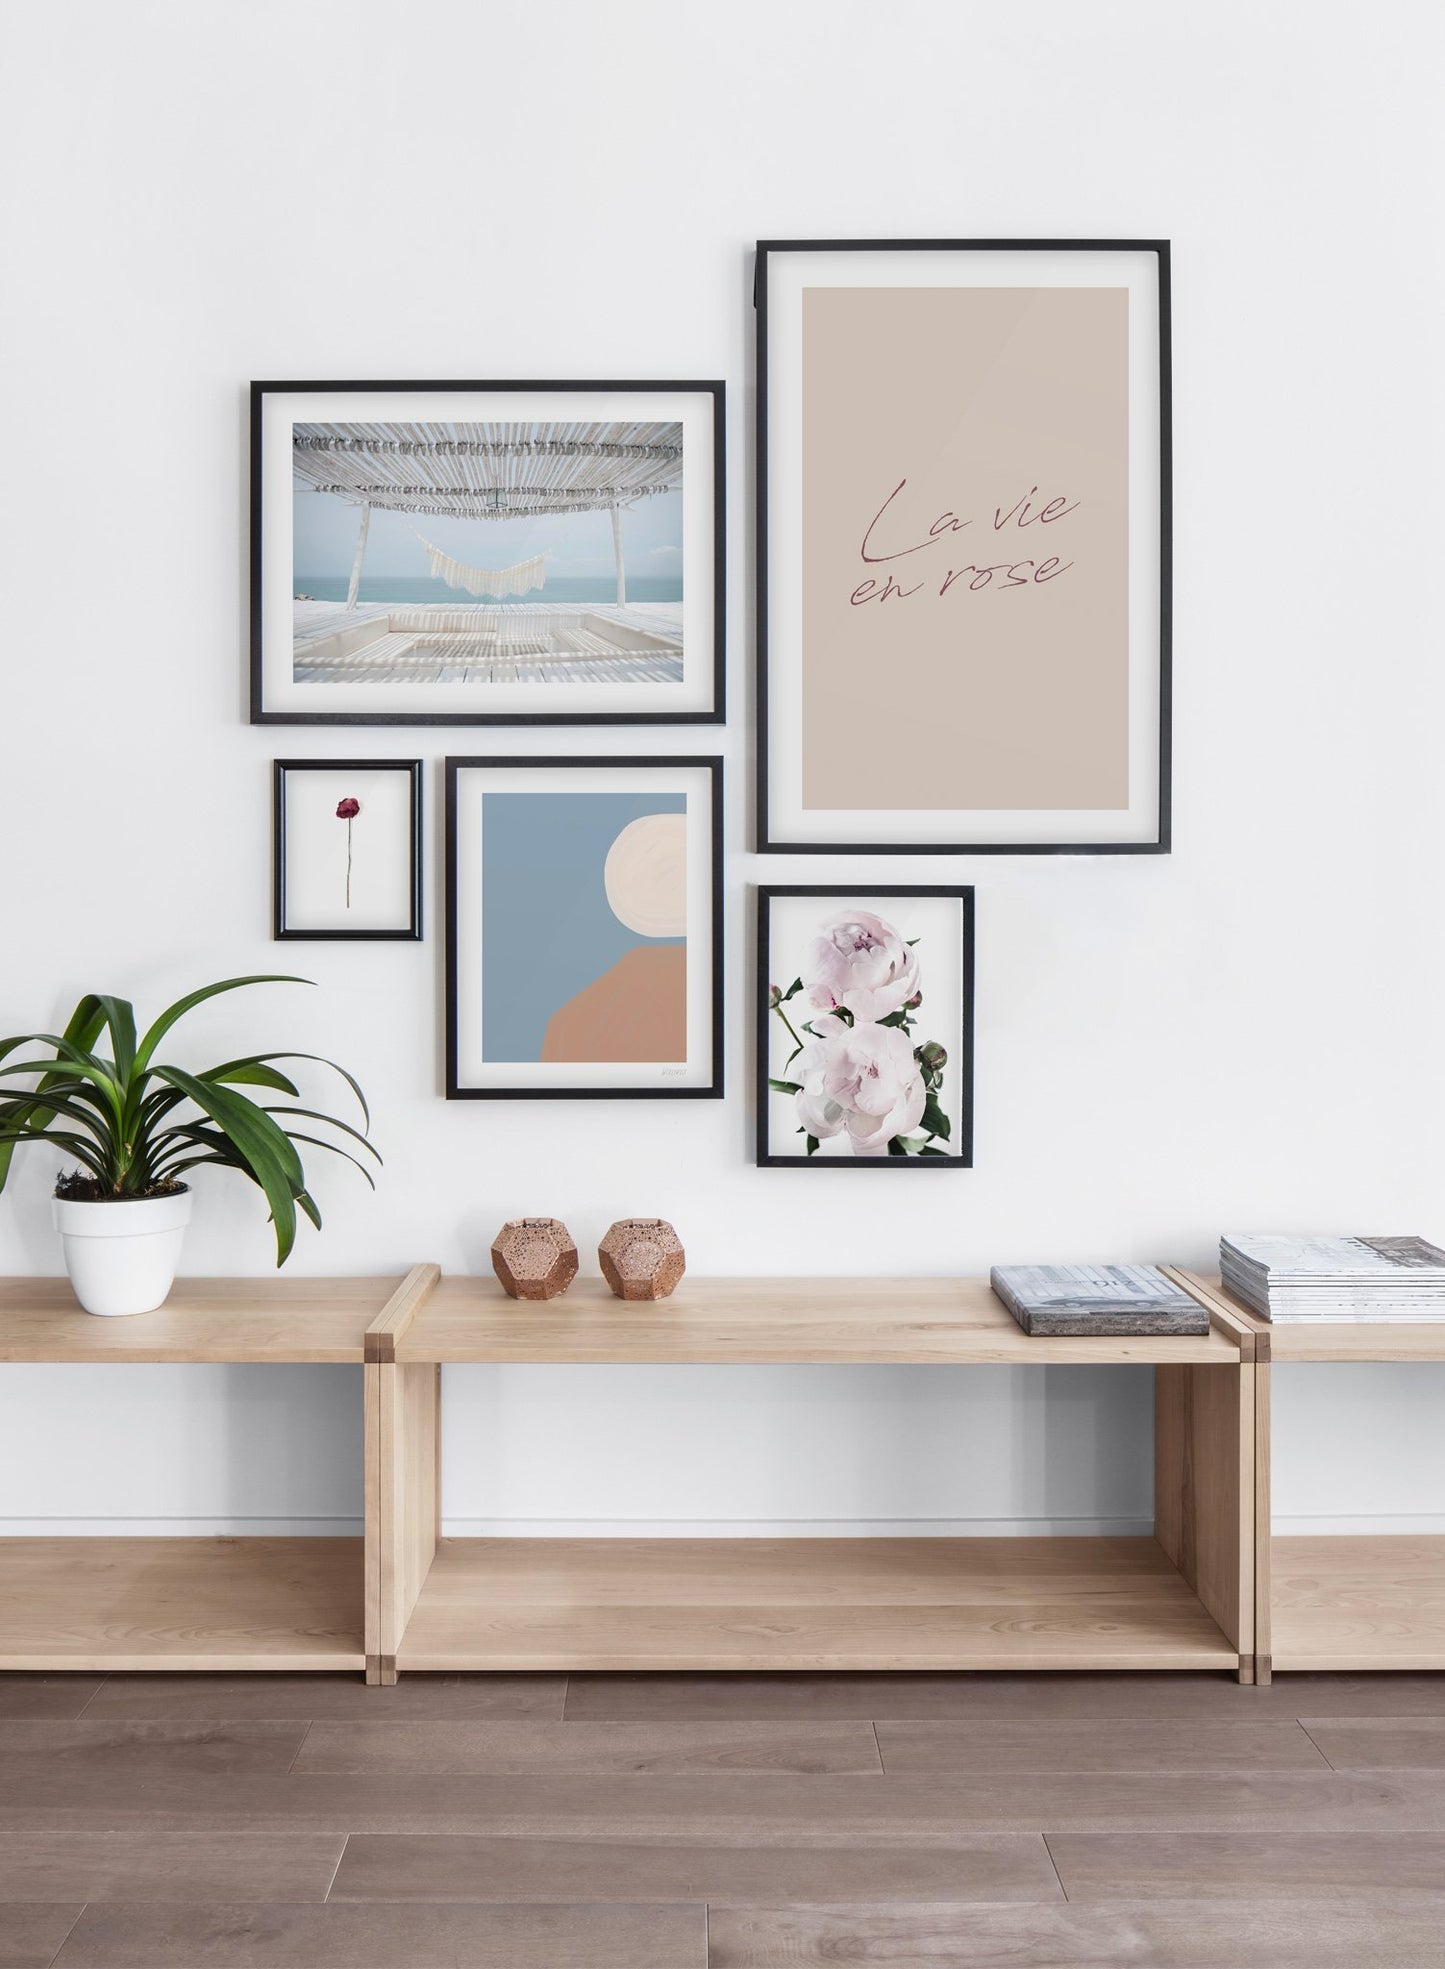 Seaside Hammock modern minimalist photography poster by Opposite Wall - Entryway - Gallery